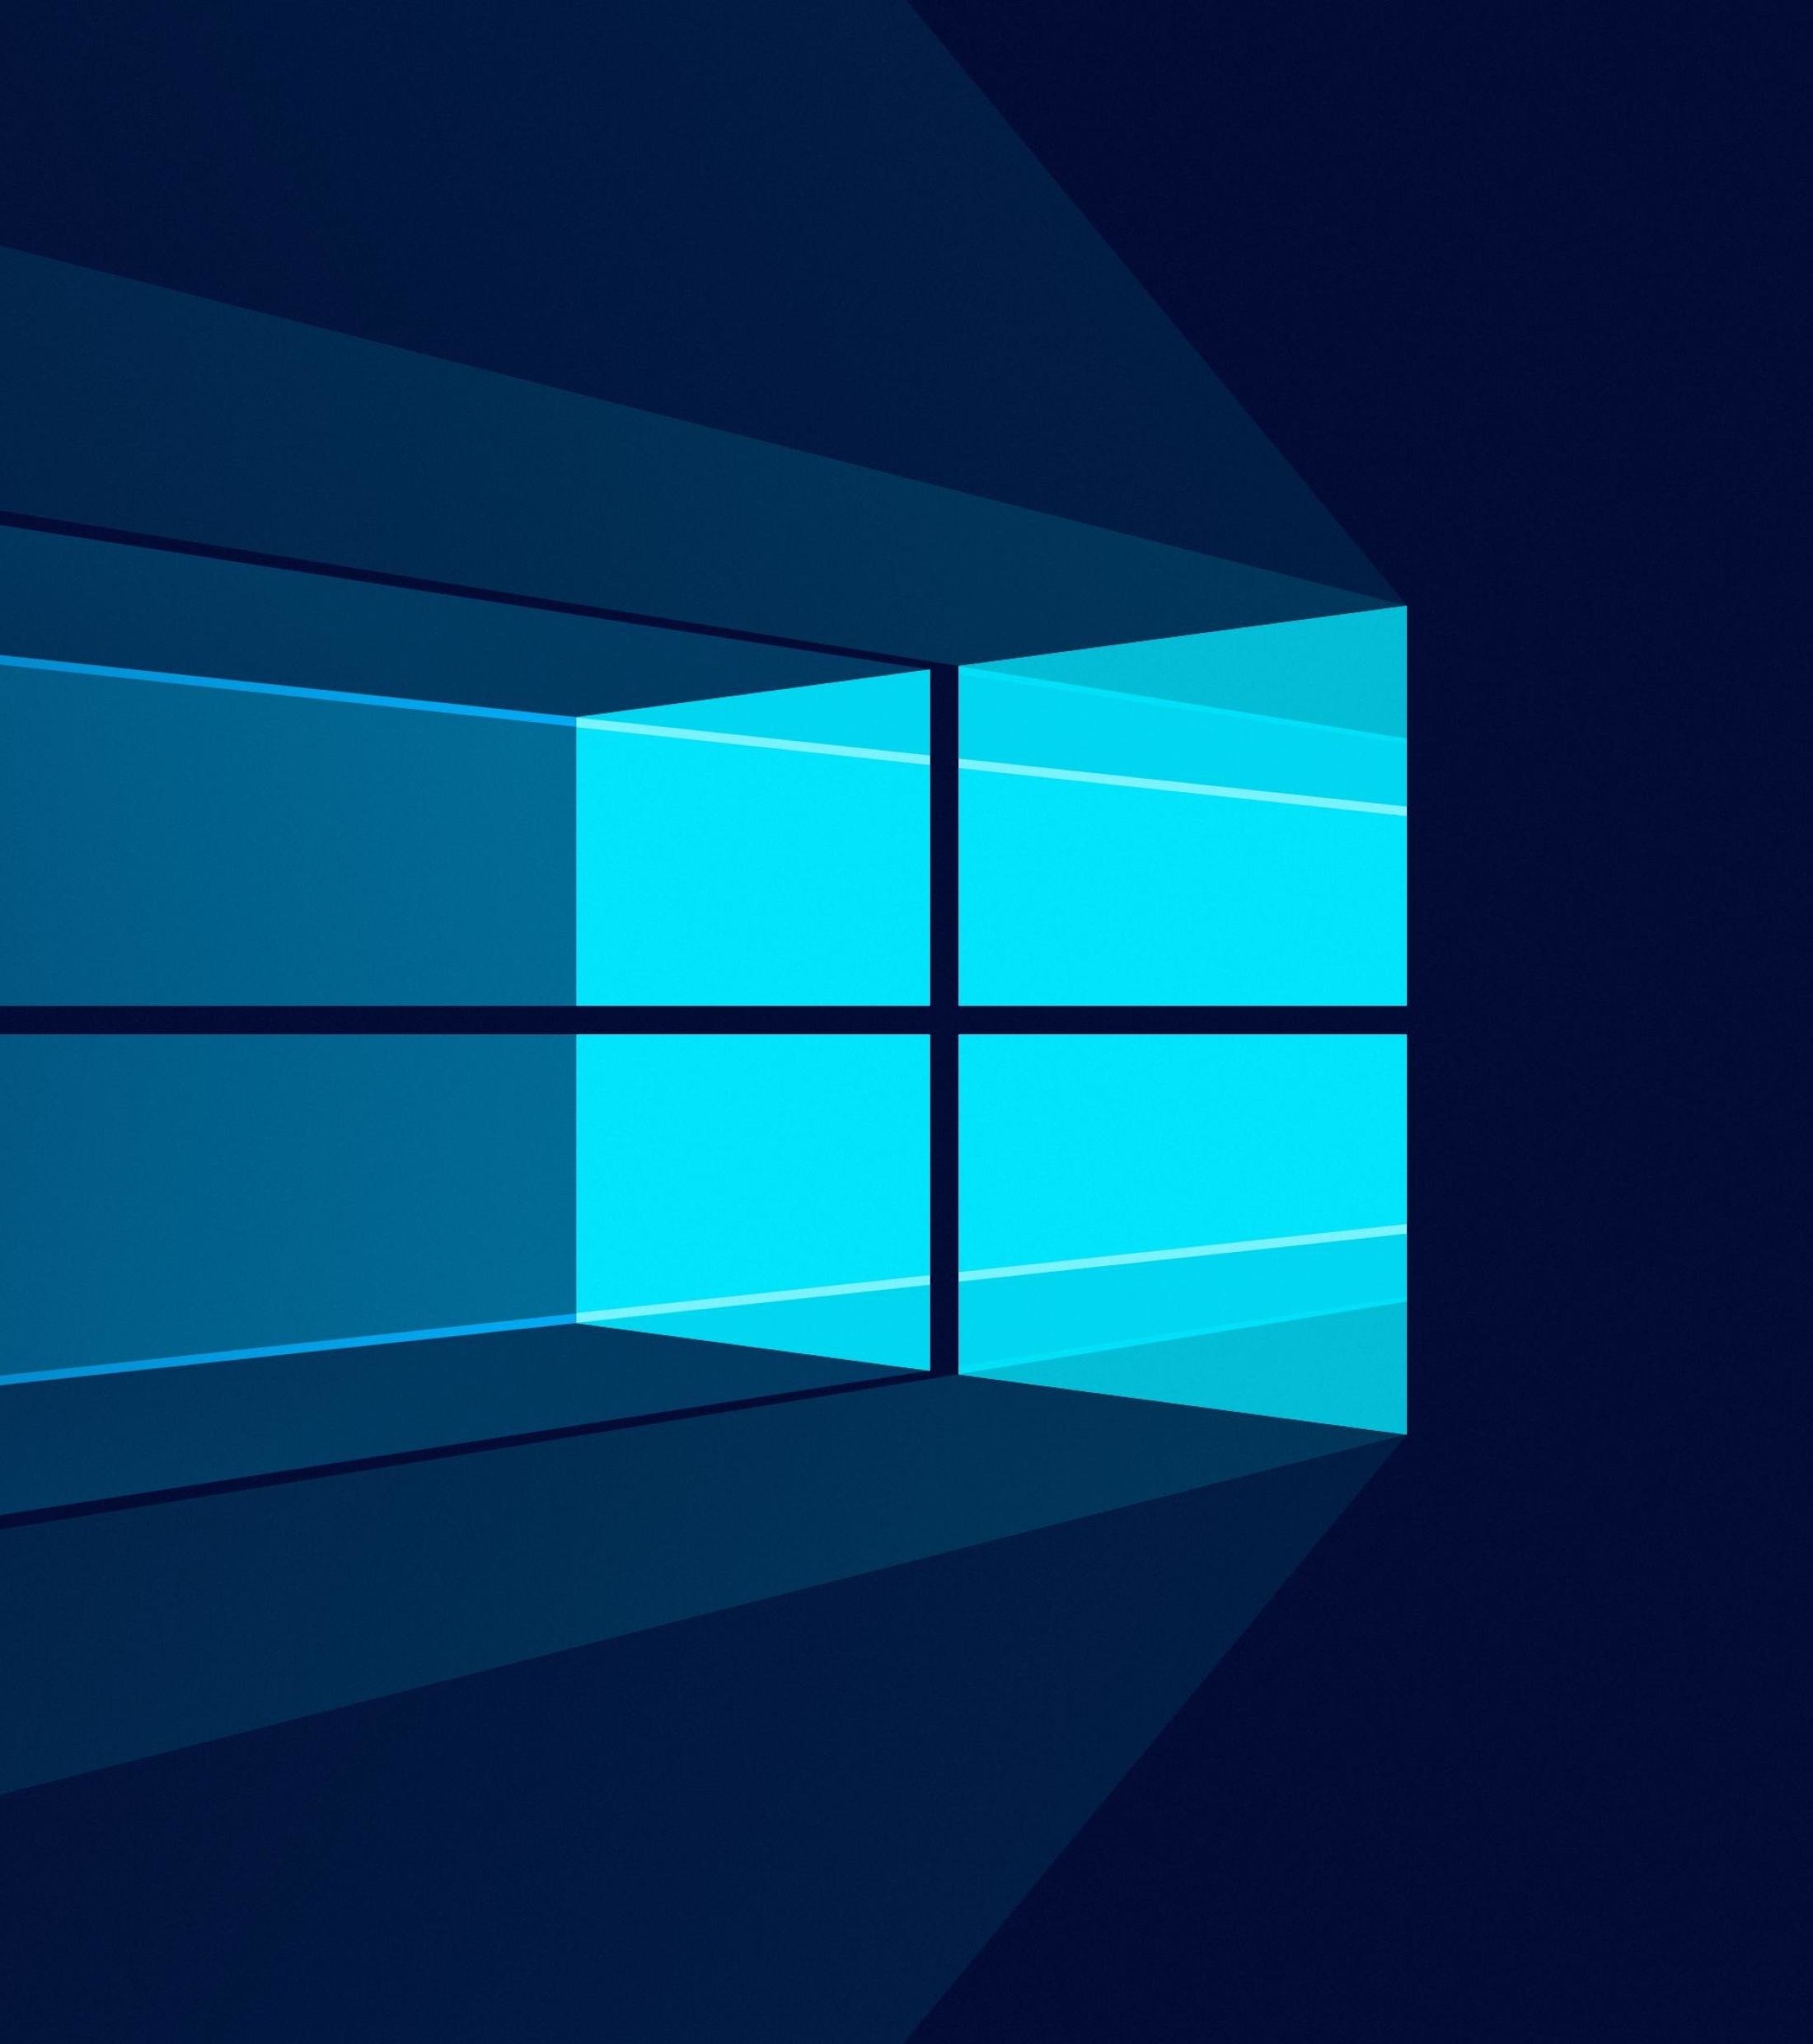 X flat. Windows 10. Windows Wallpaper. Windows 10 logo PNG. 10 Flat.